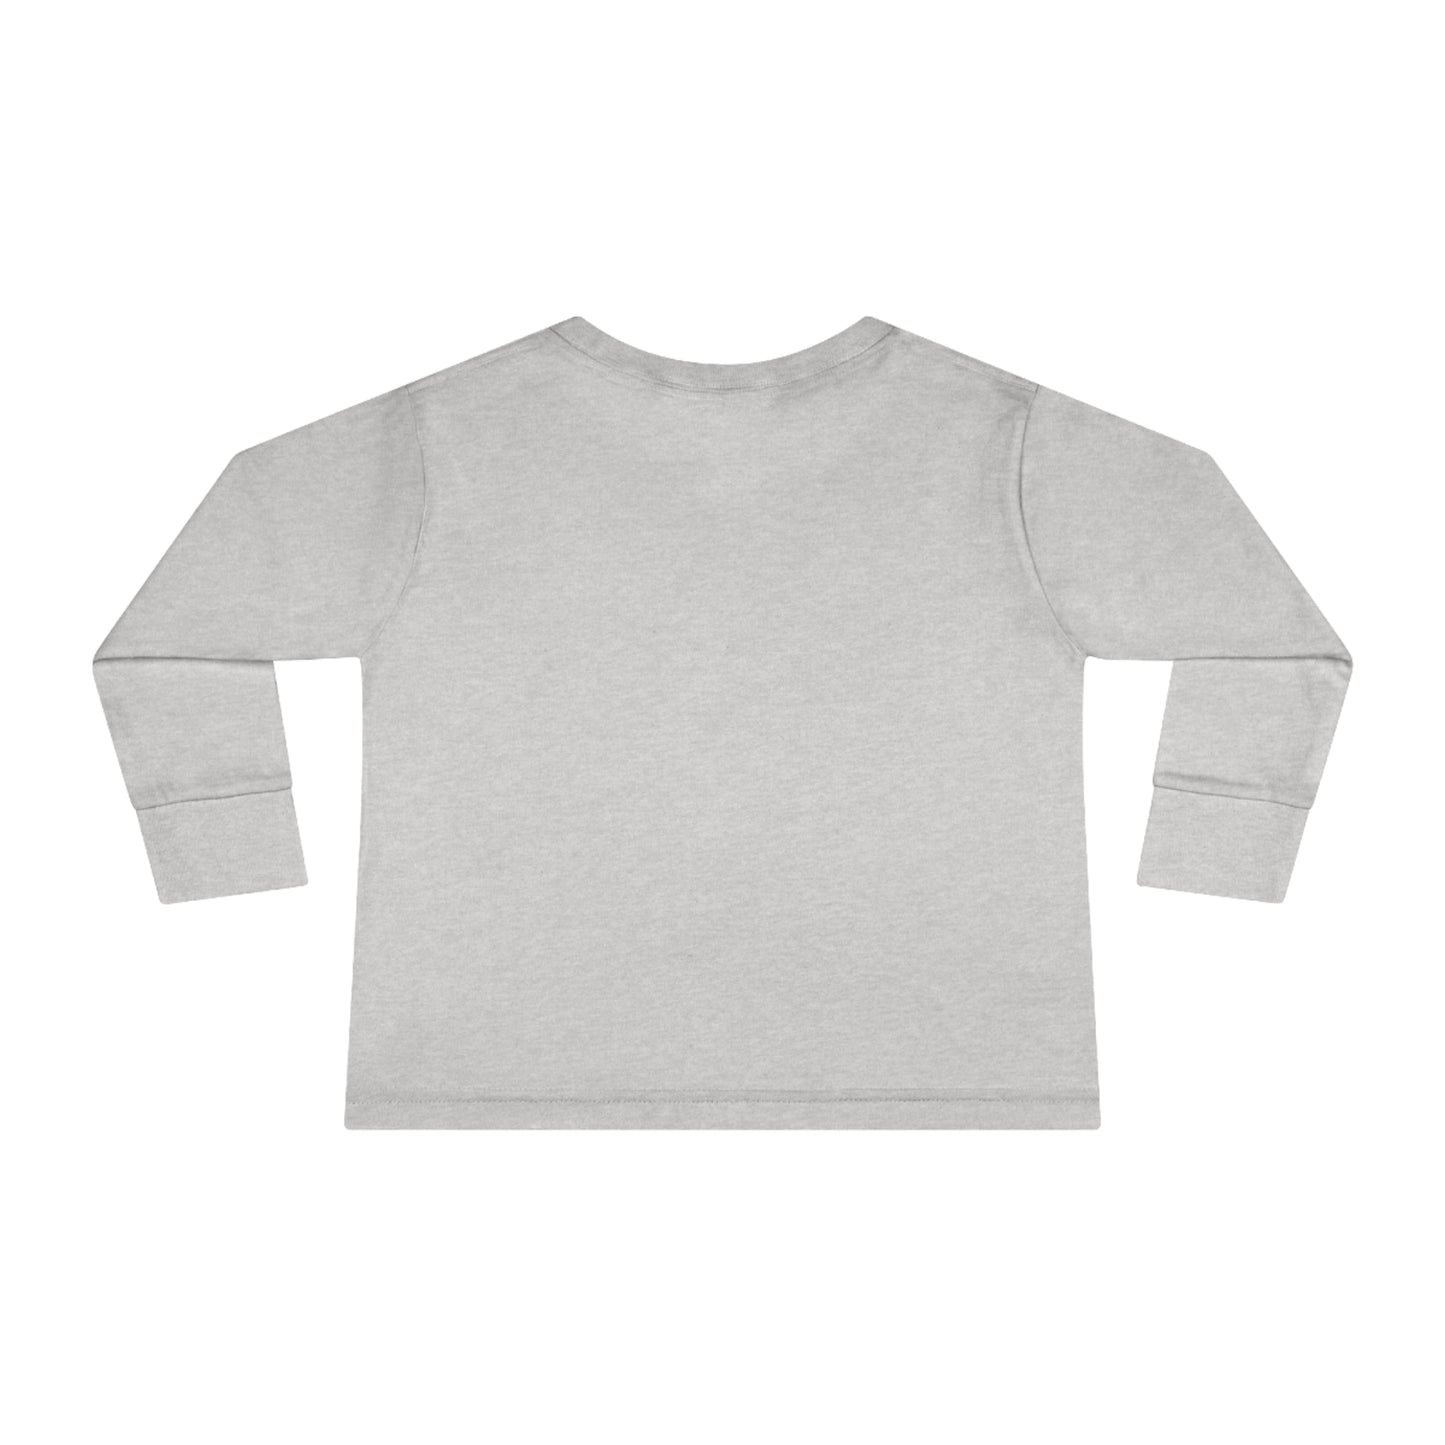 God-Loved-Me-First-Toddler-Christian-Sweatshirt Printify